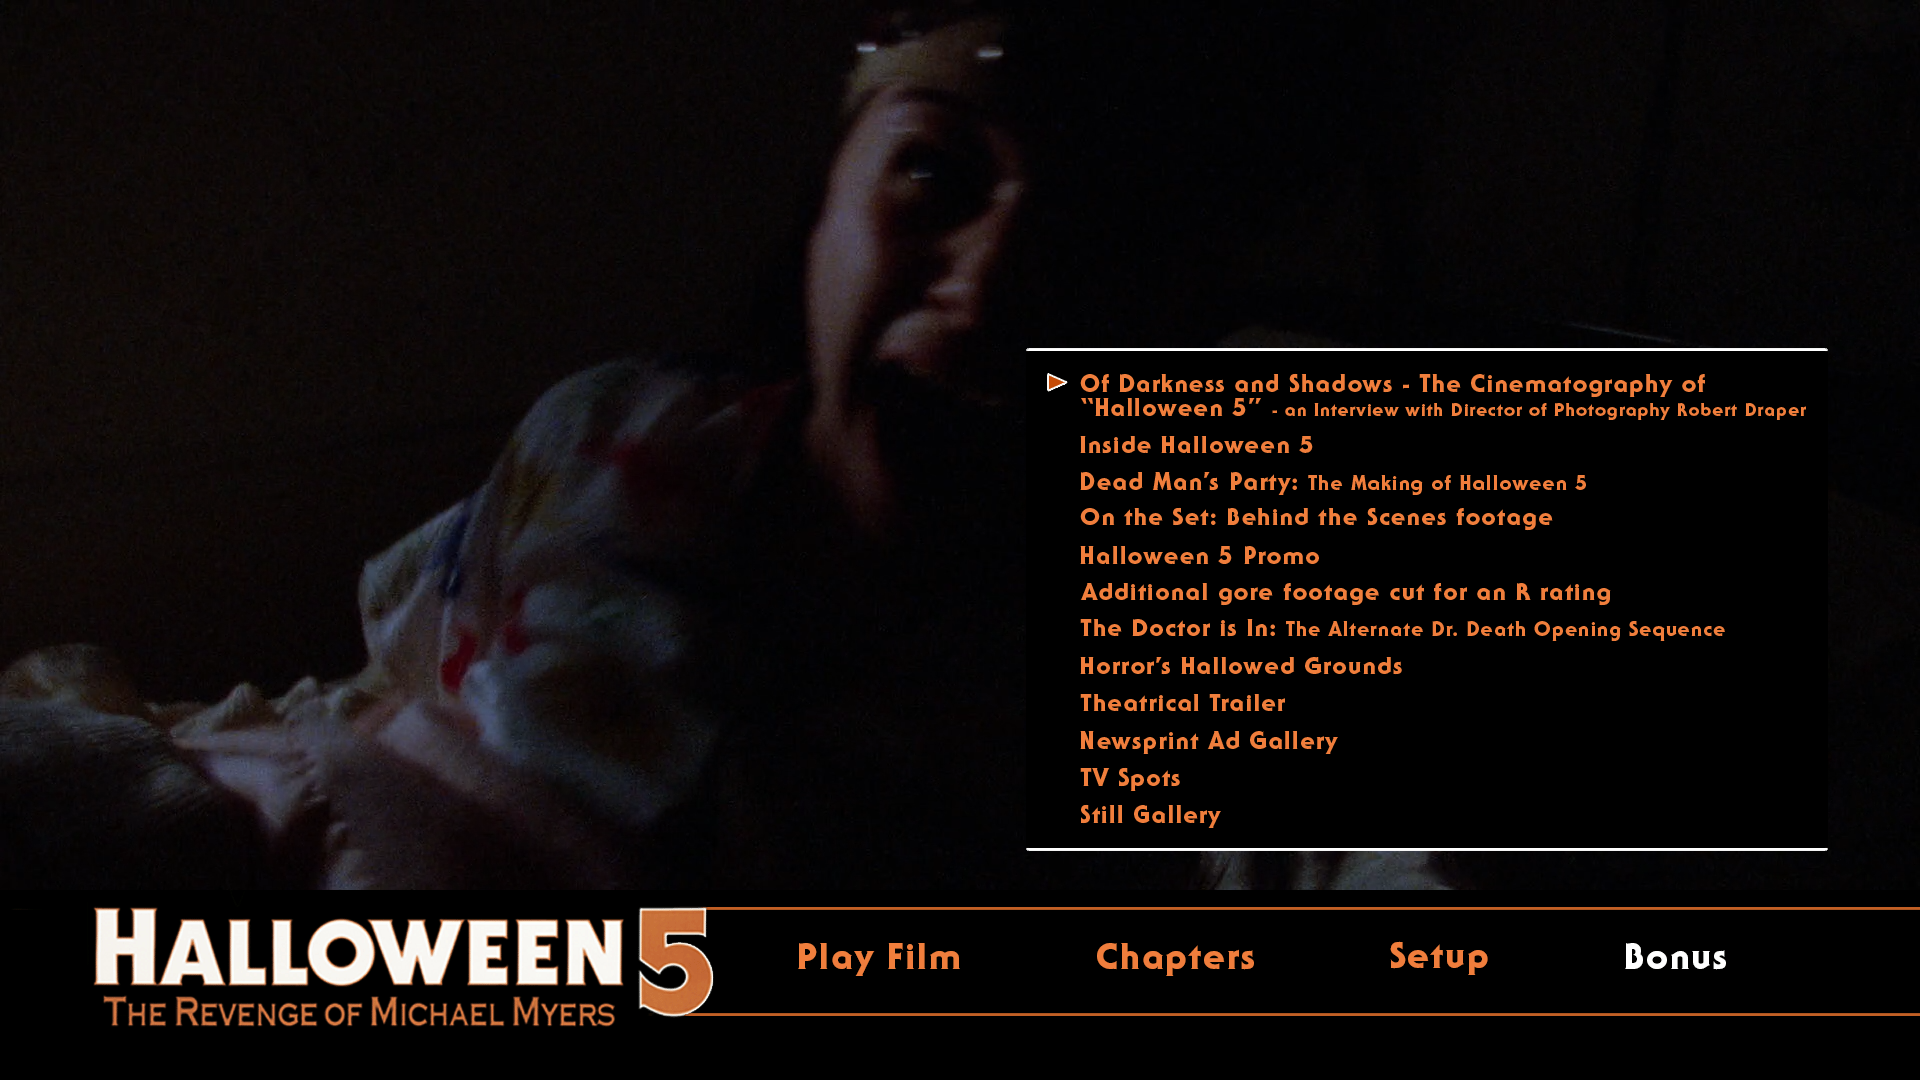 Halloween 5 Blu-ray extras menu